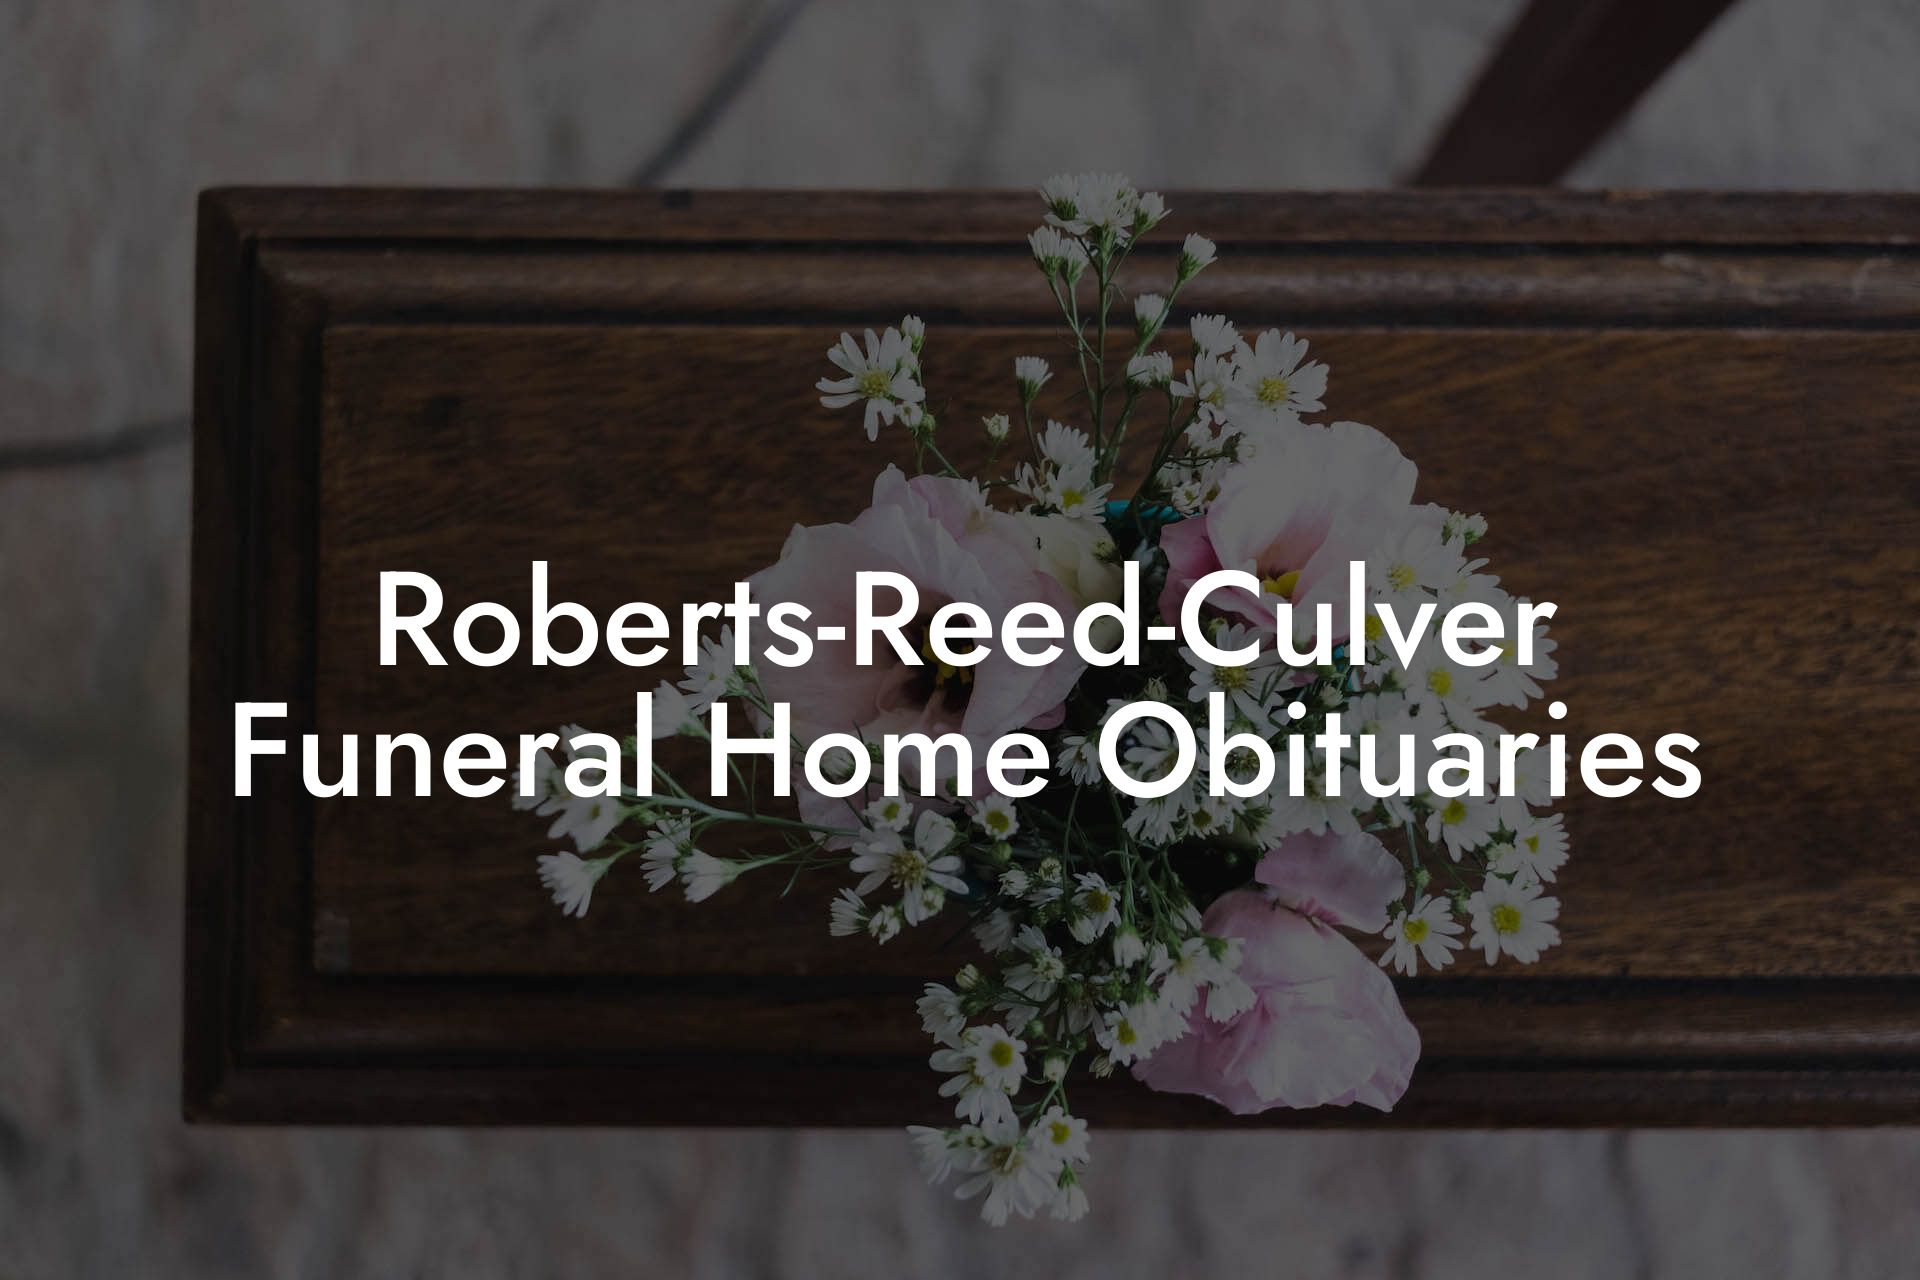 Roberts-Reed-Culver Funeral Home Obituaries